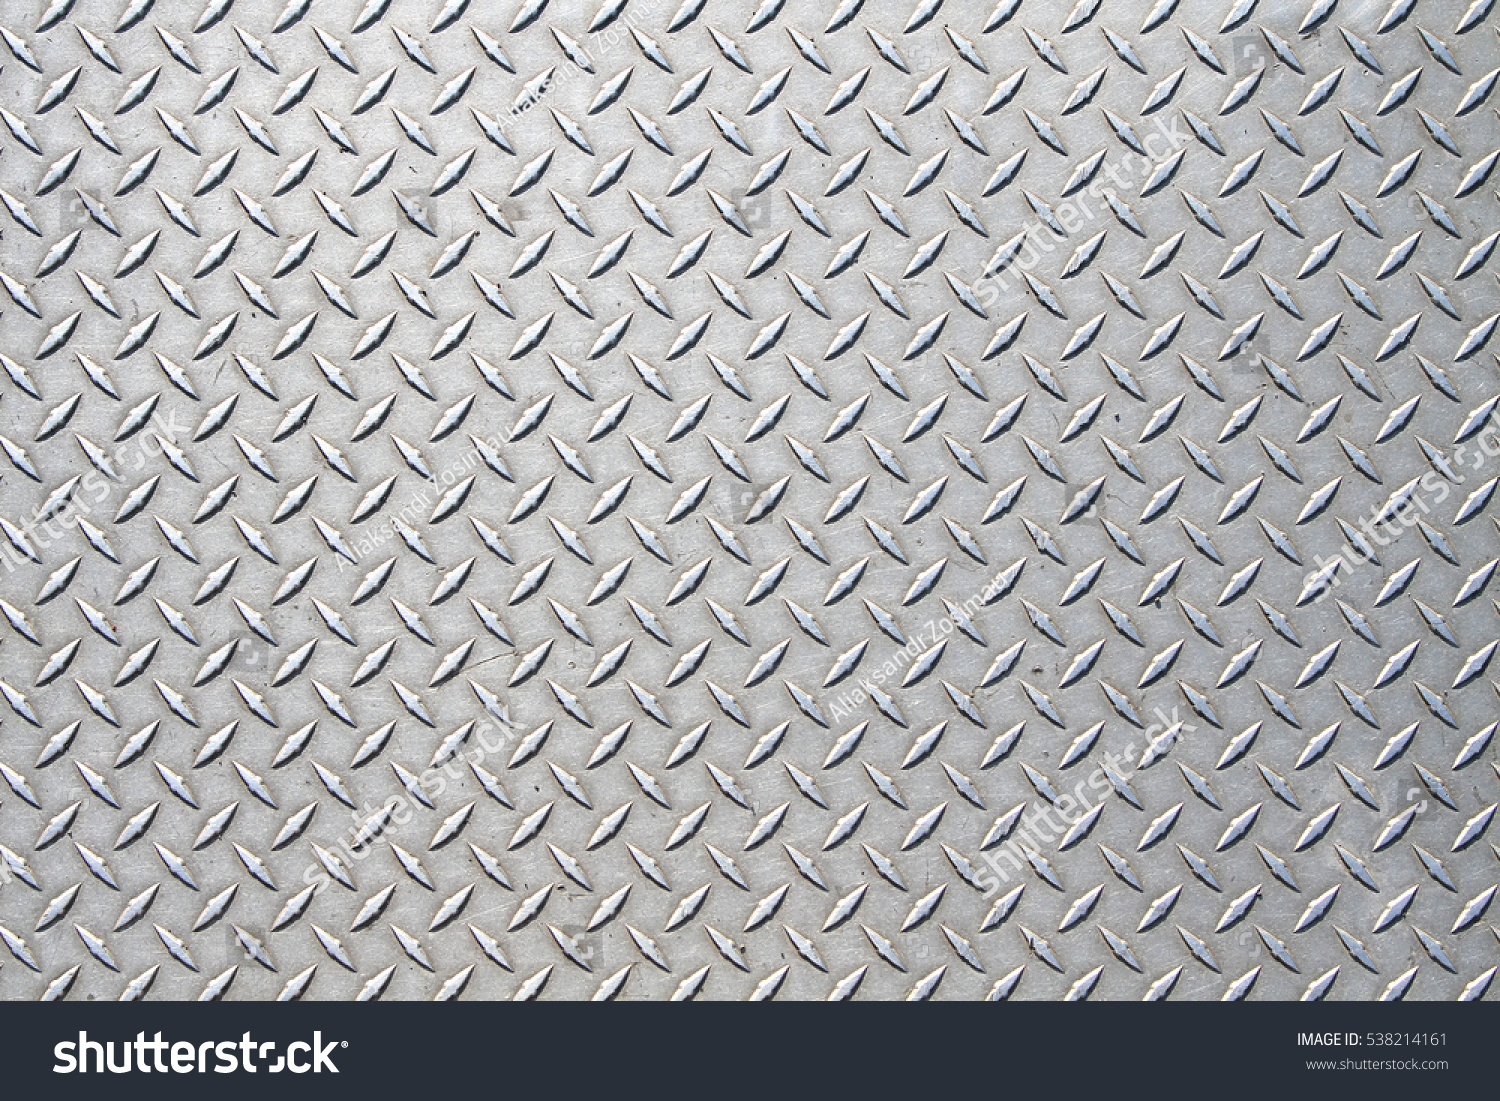 Metal floor plate with diamond pattern. #538214161